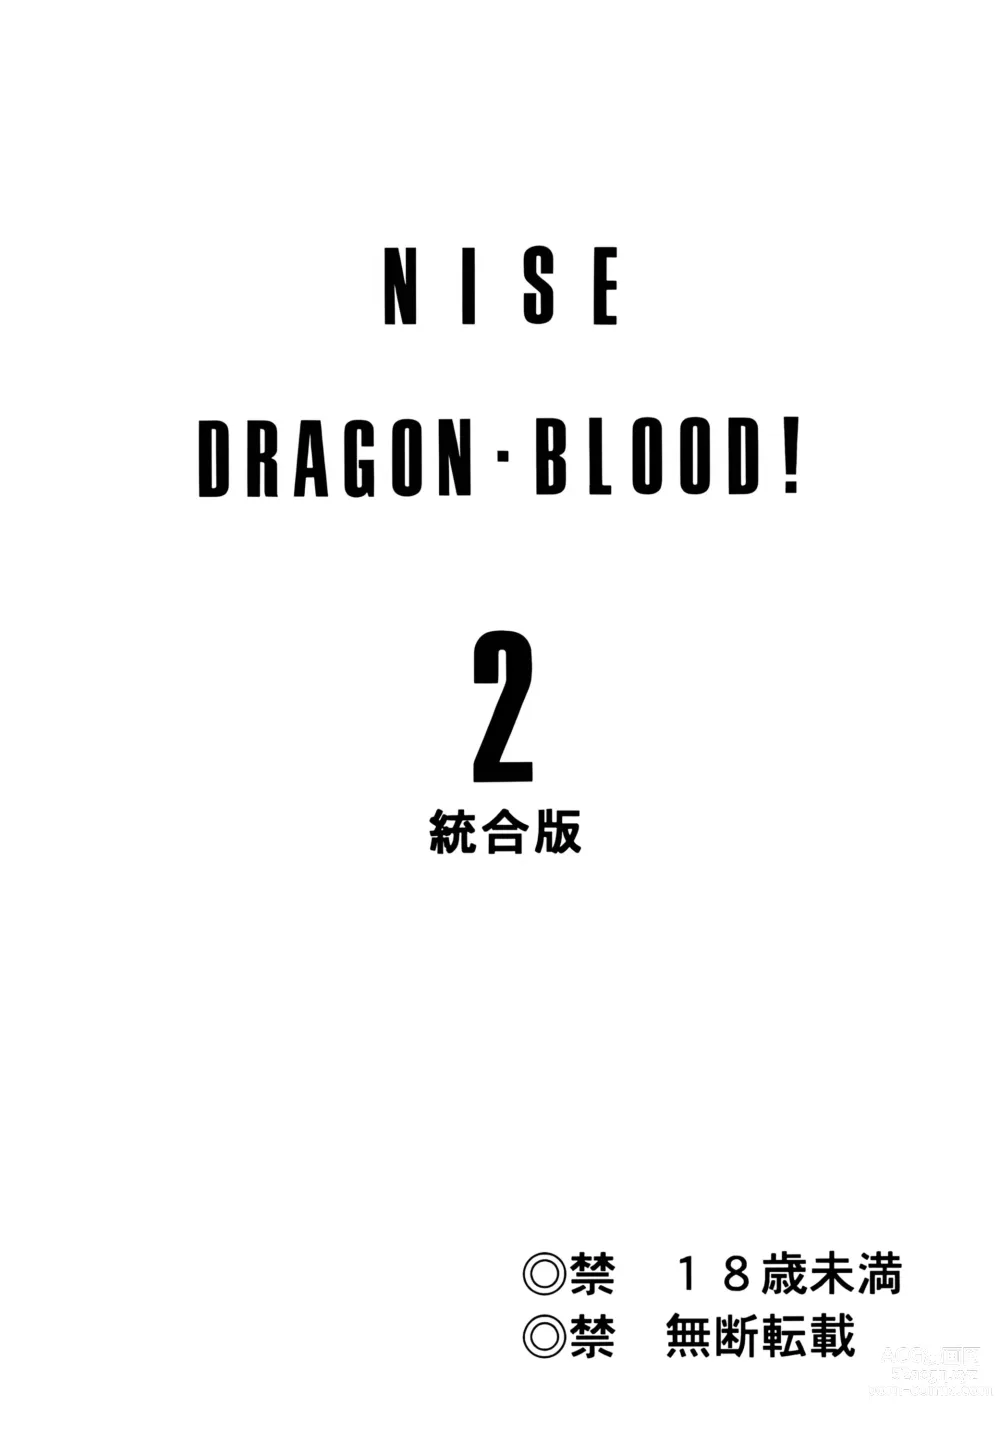 Page 2 of doujinshi Nise DRAGON BLOOD! 2.